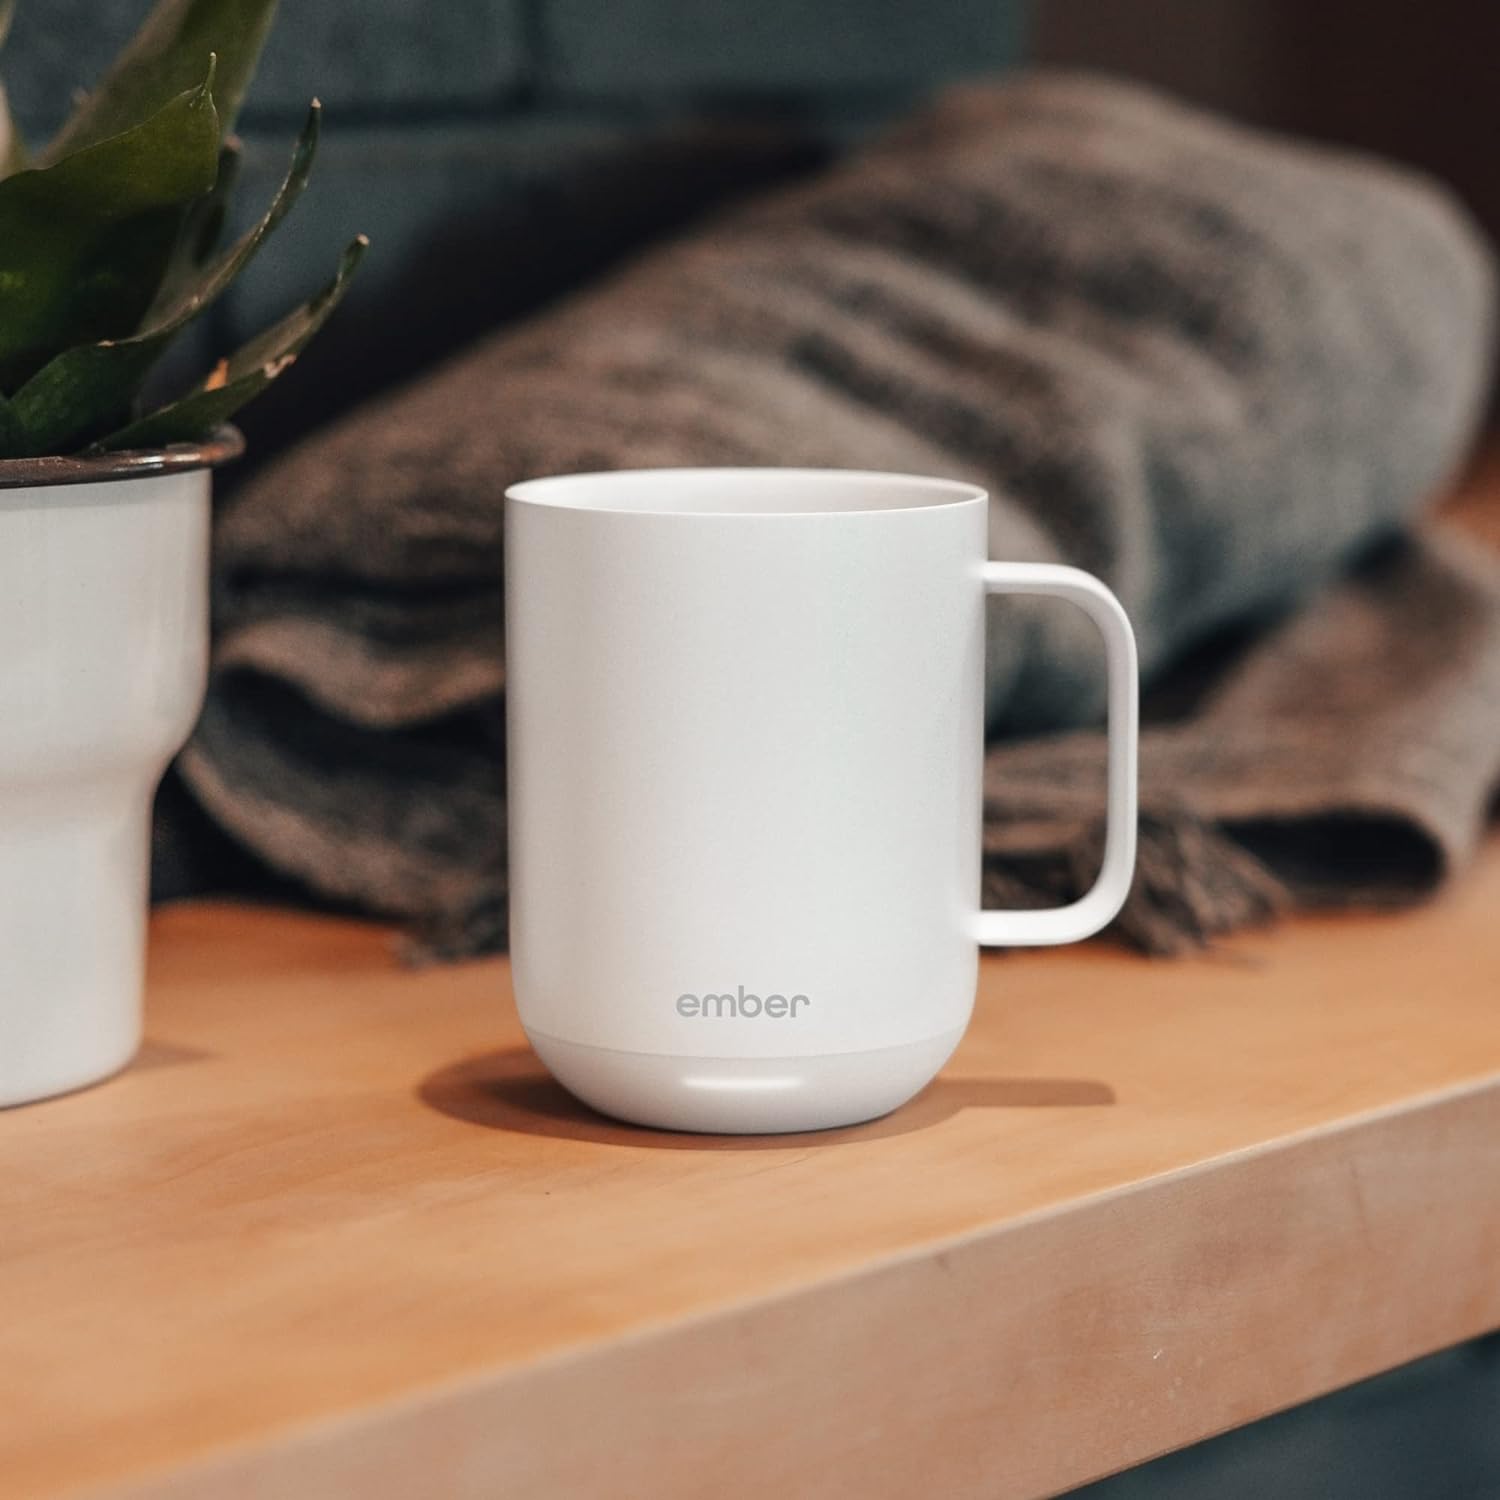 Ember's Mug 2 and Travel Mug 2 extend your coffee temperature